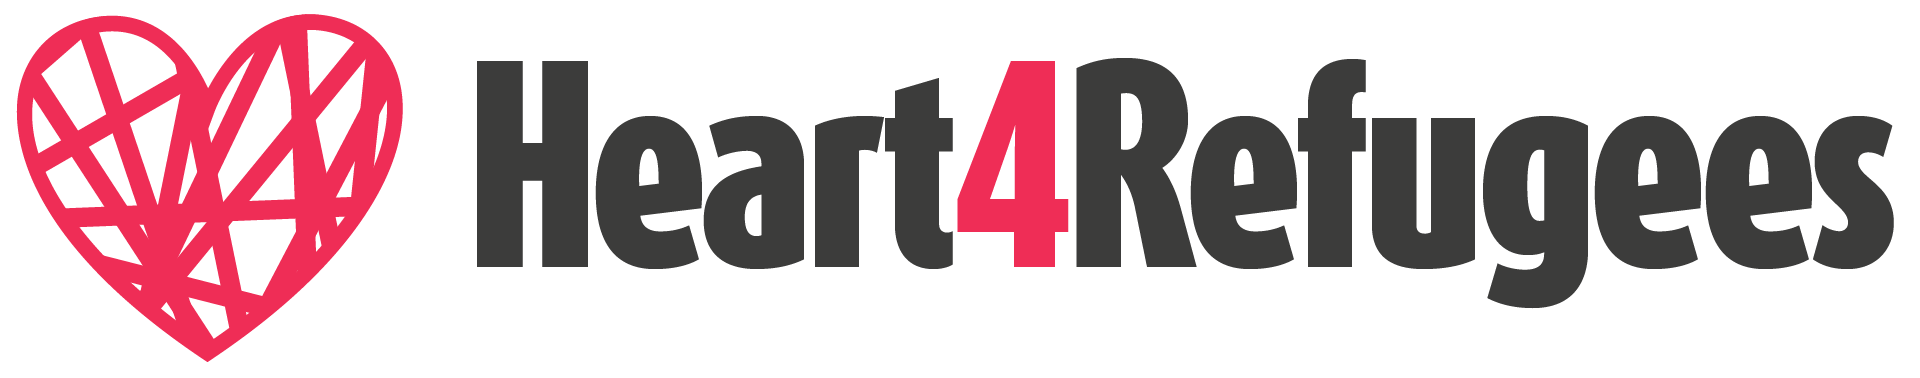 Heart4Refugees logo